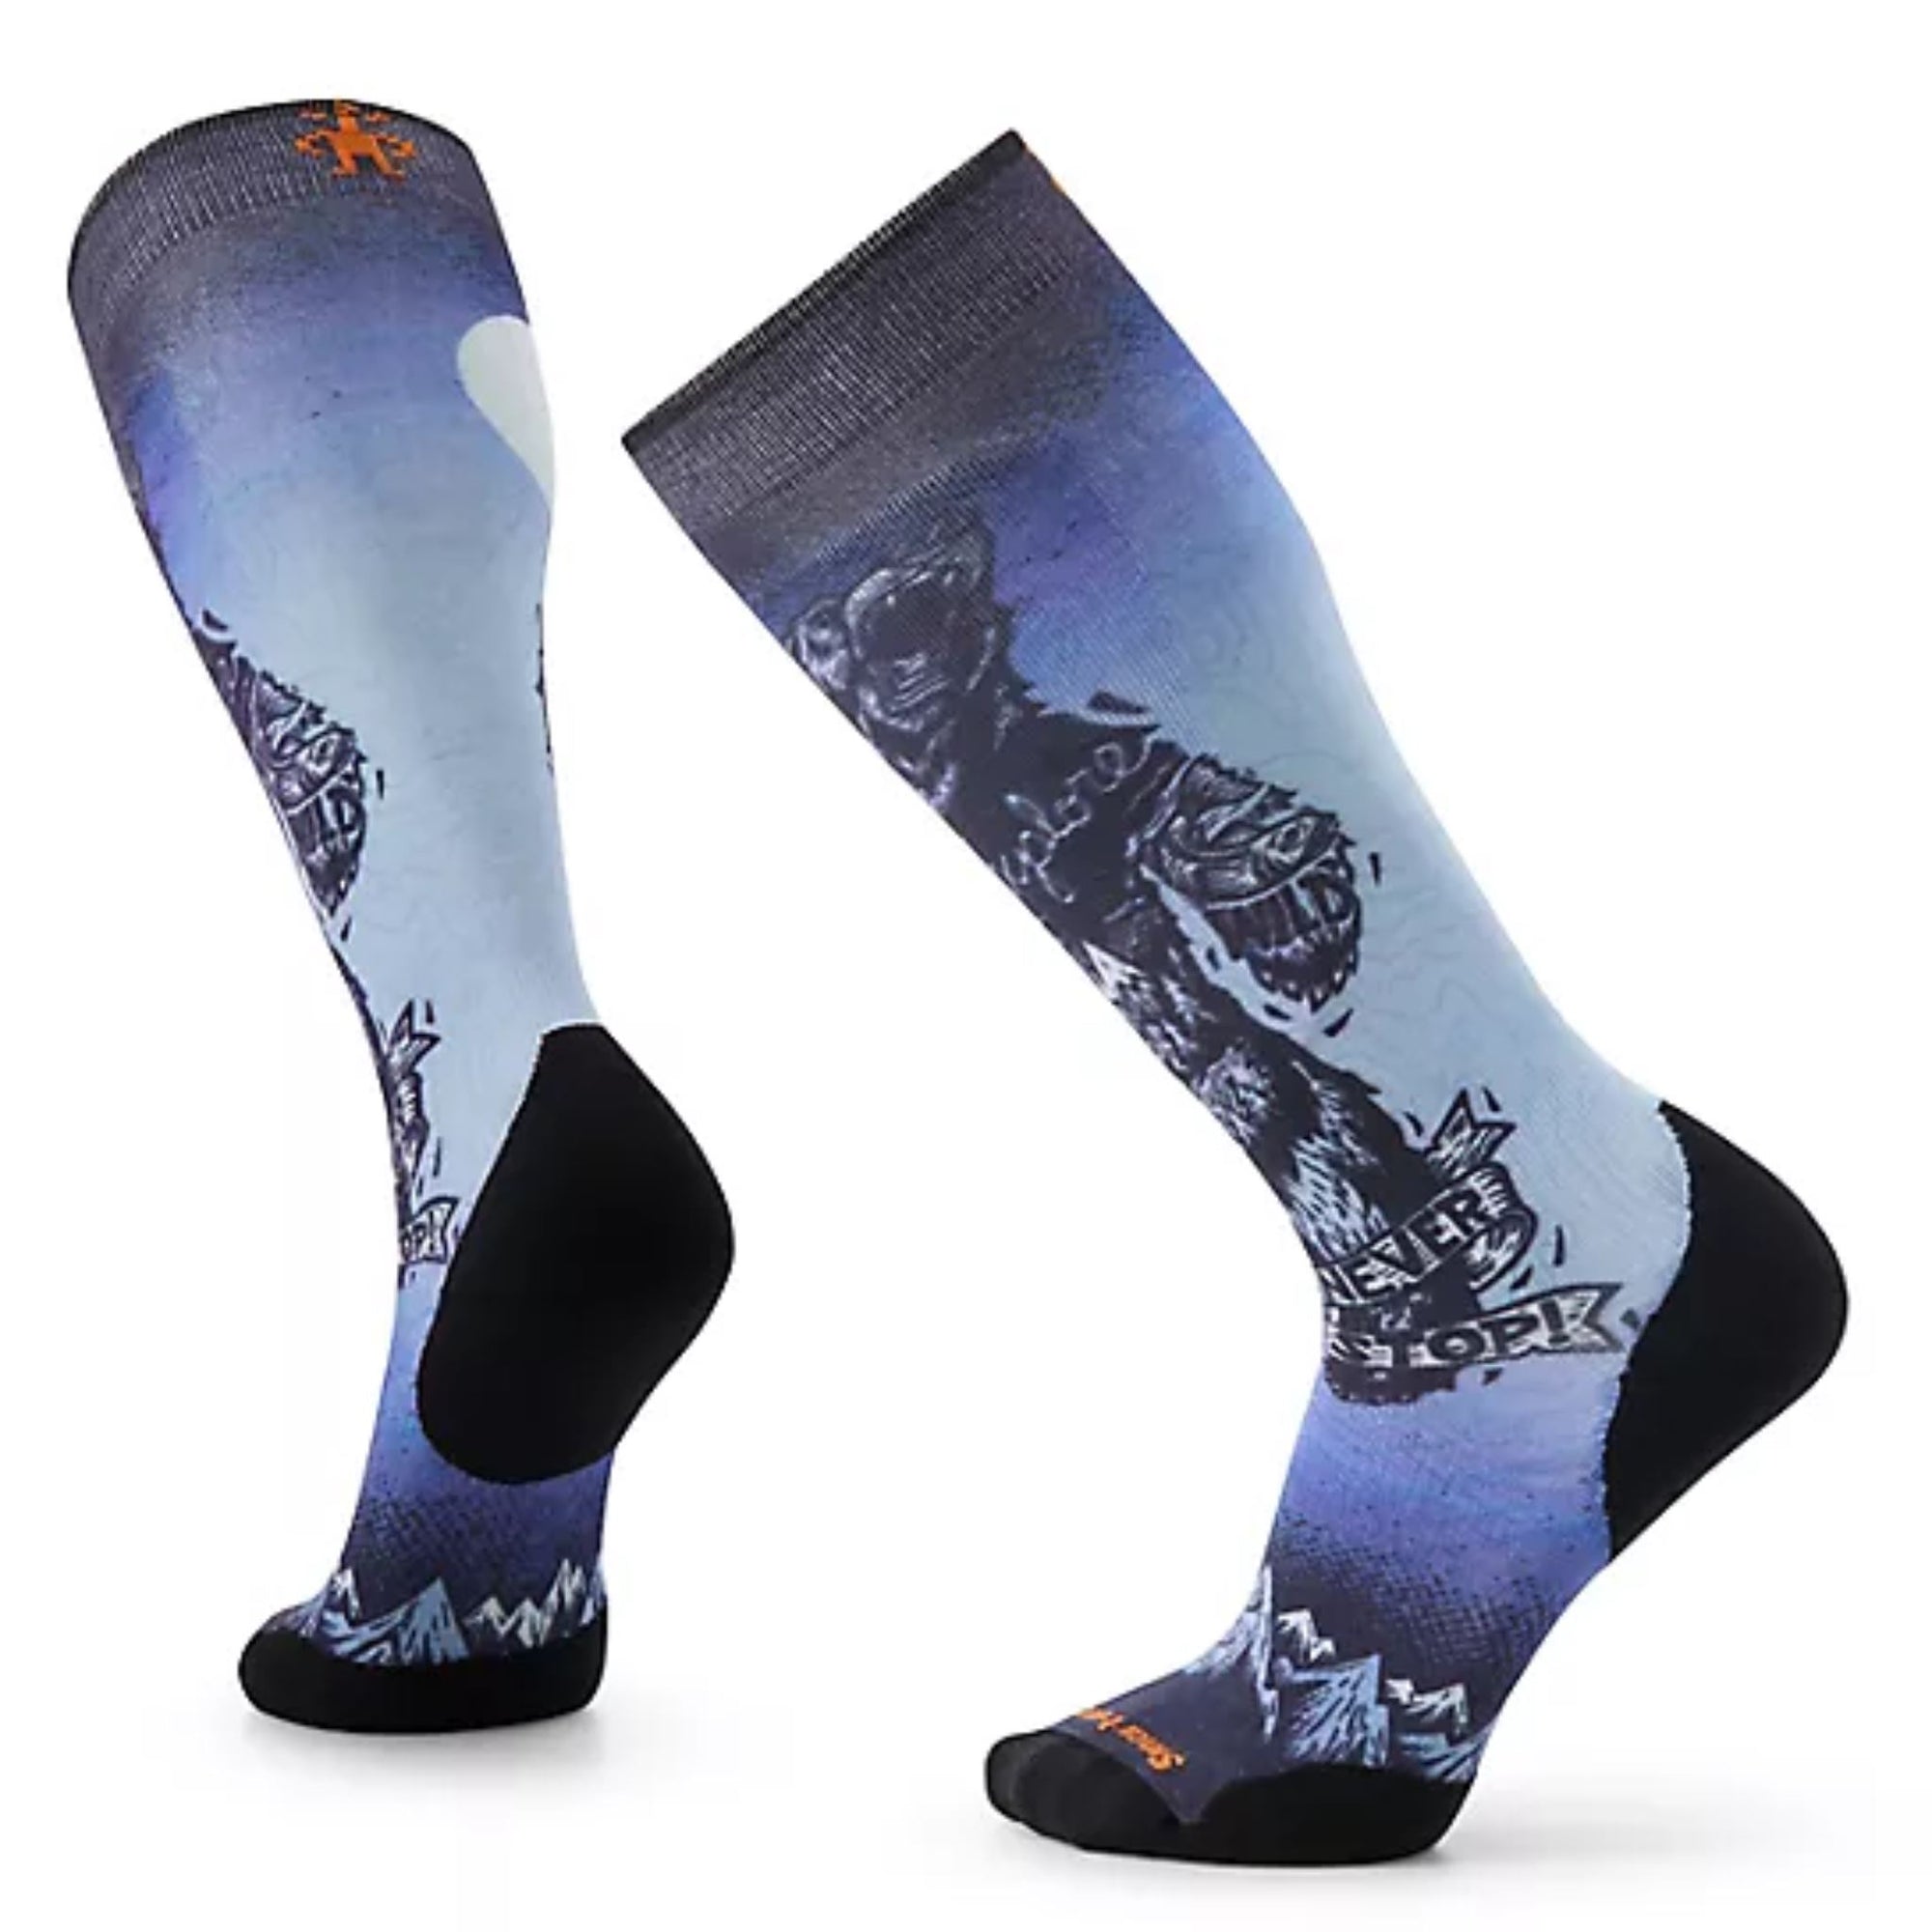 Smartwool Ski Targeted Cushion Socks - Always Explore Print Socks Smartwool M - Men(6-8.5US / 38-41EU)Women(7-9.5US / 38-41EU) 